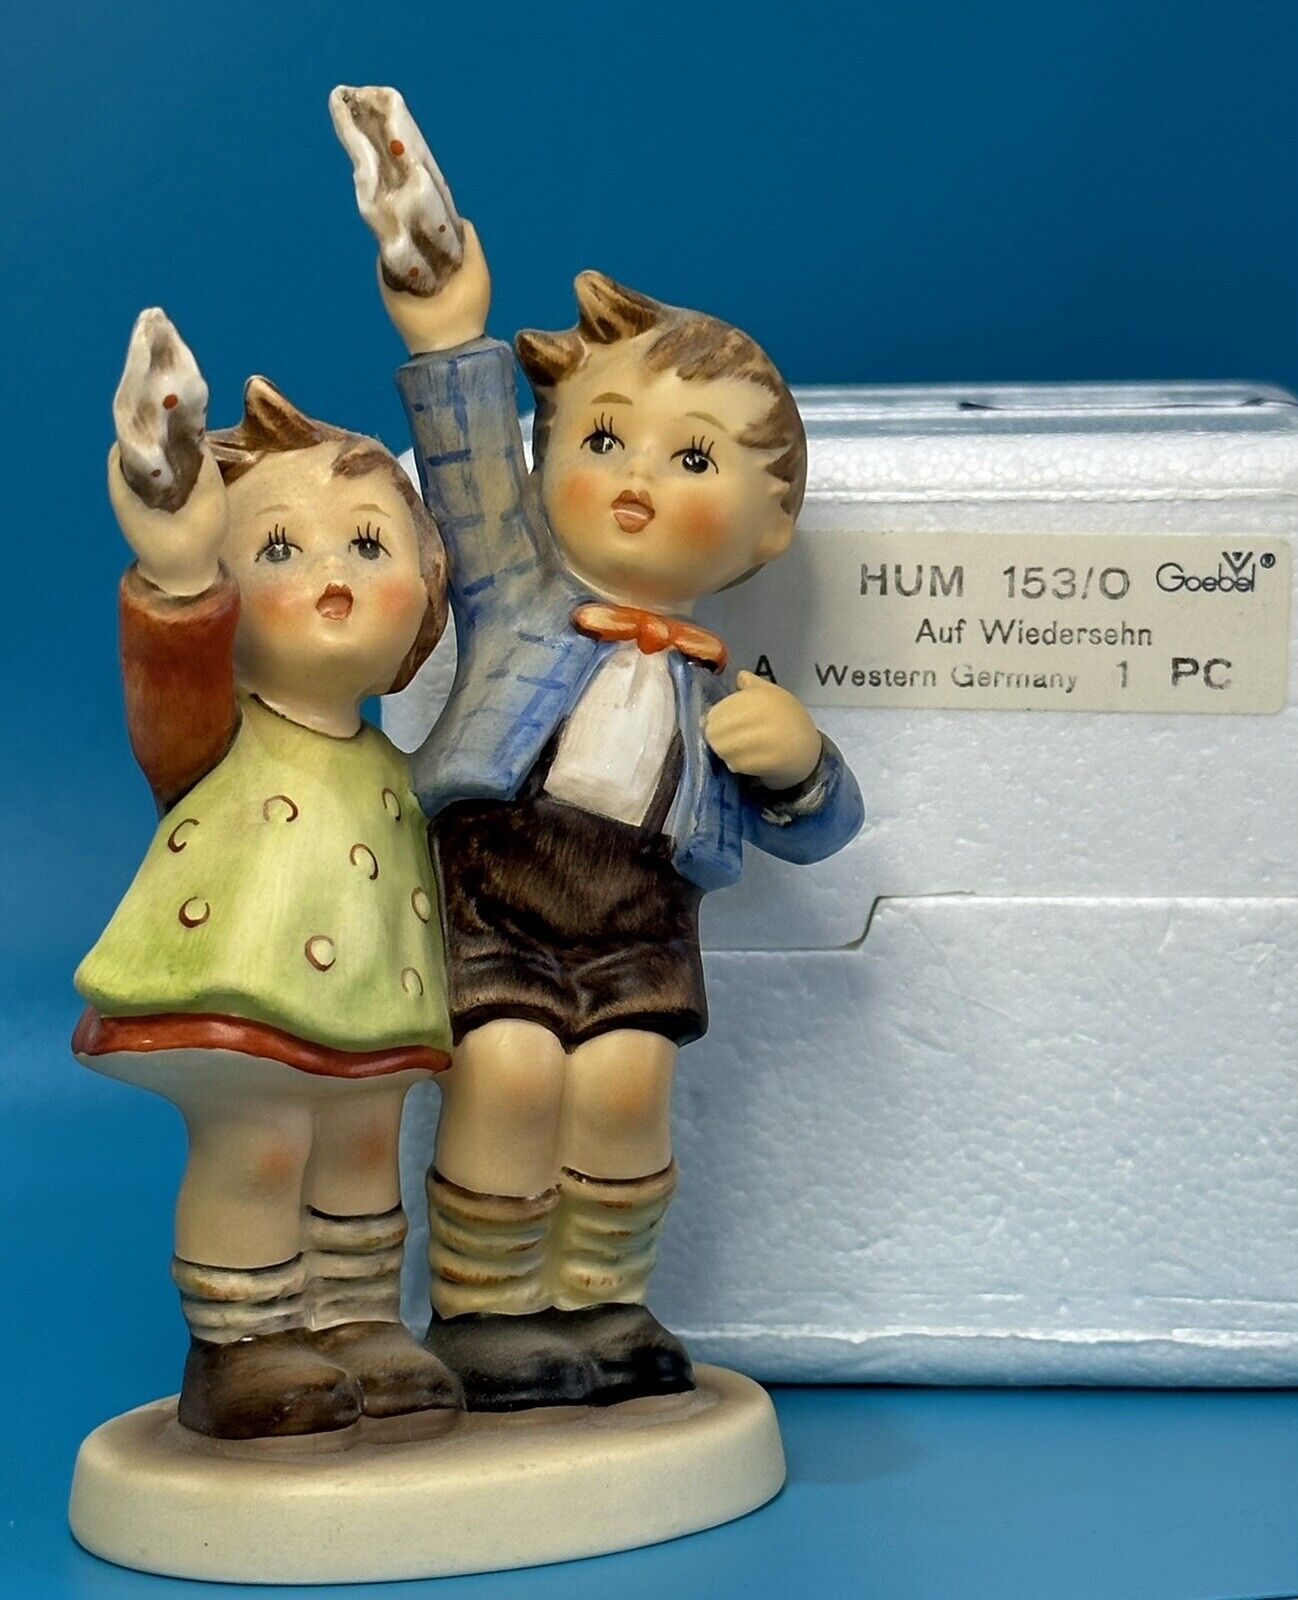 Vintage Goebel Hummel Figurine AUF WIEDERSEHEN Hum 153/0 TMK-5 West Germany MINT